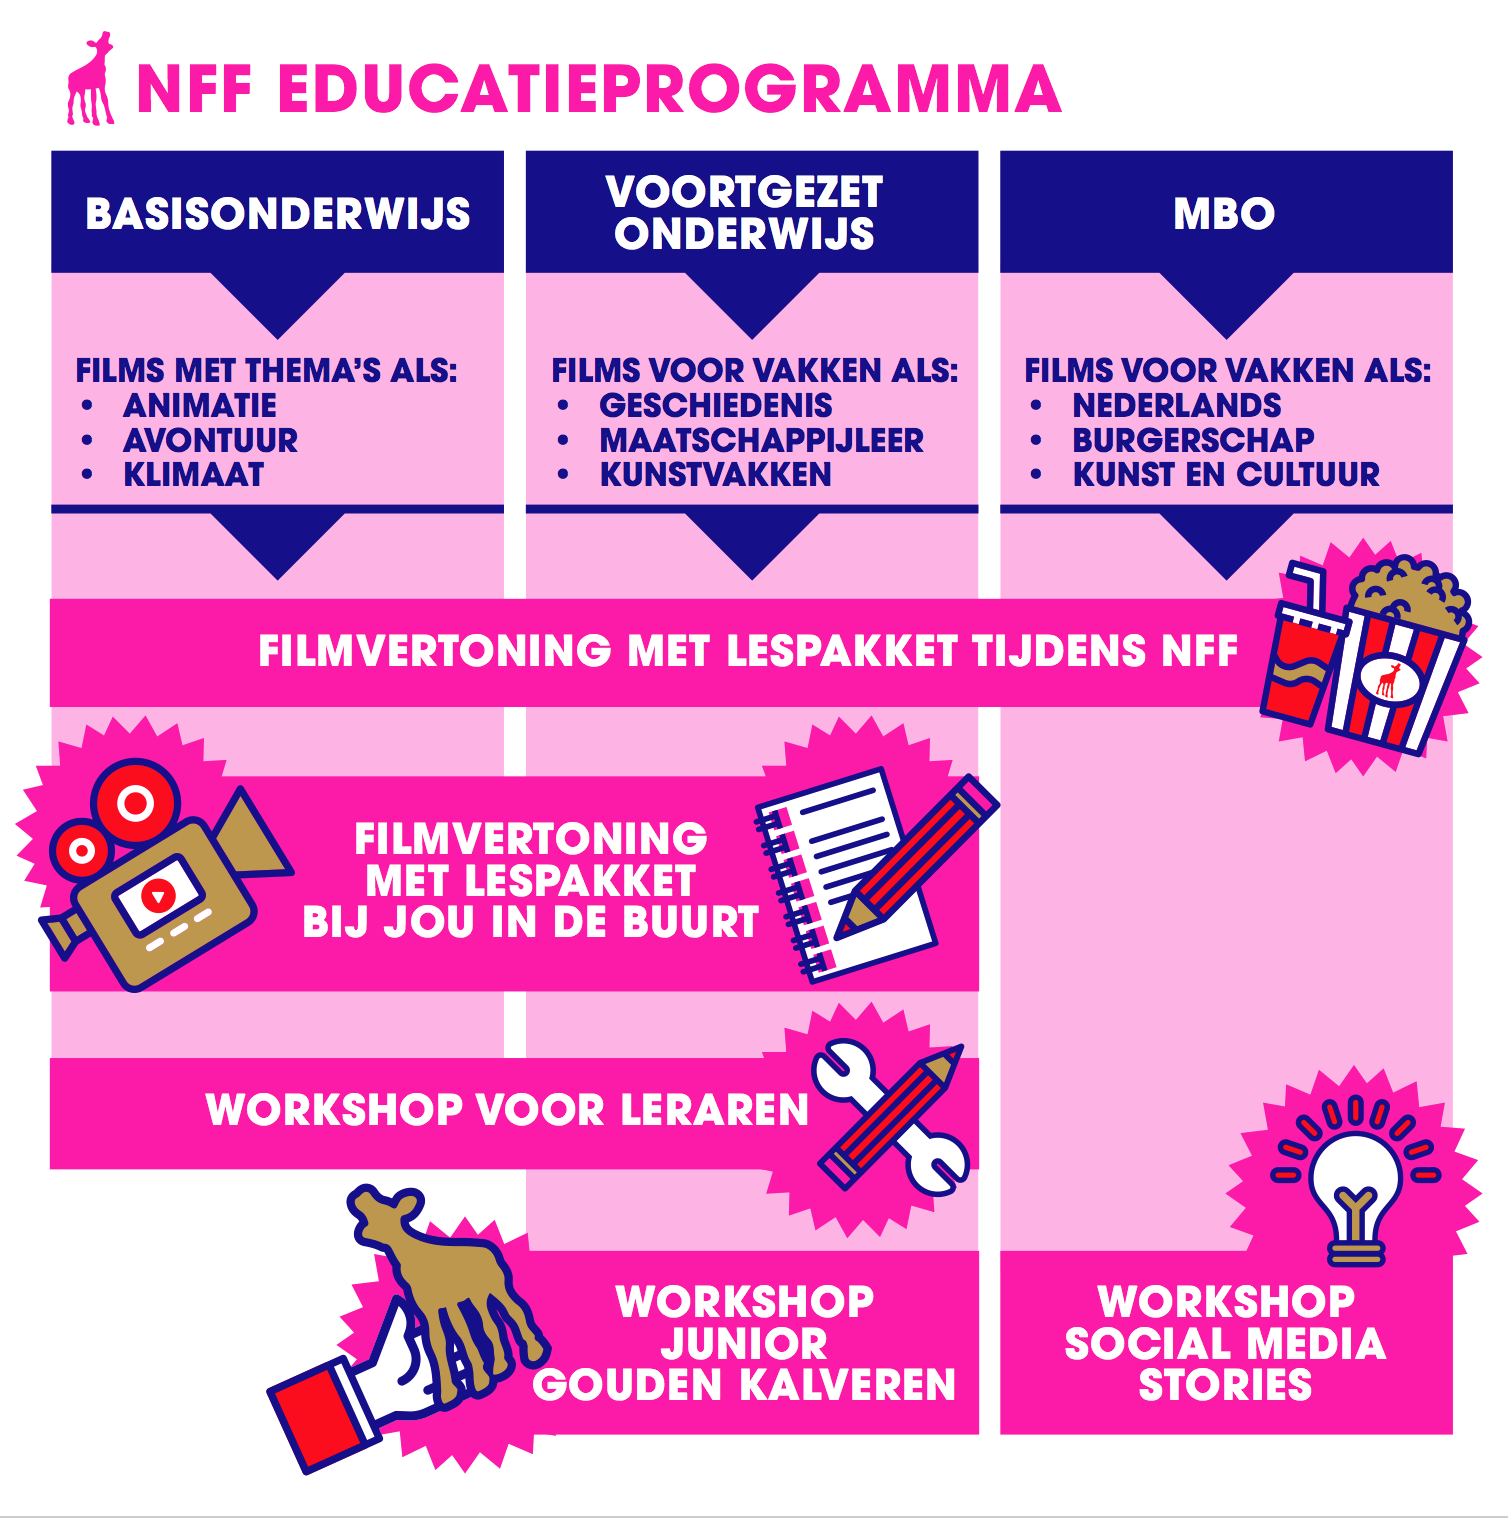 Educatieprogramma Nederlands Film Festival